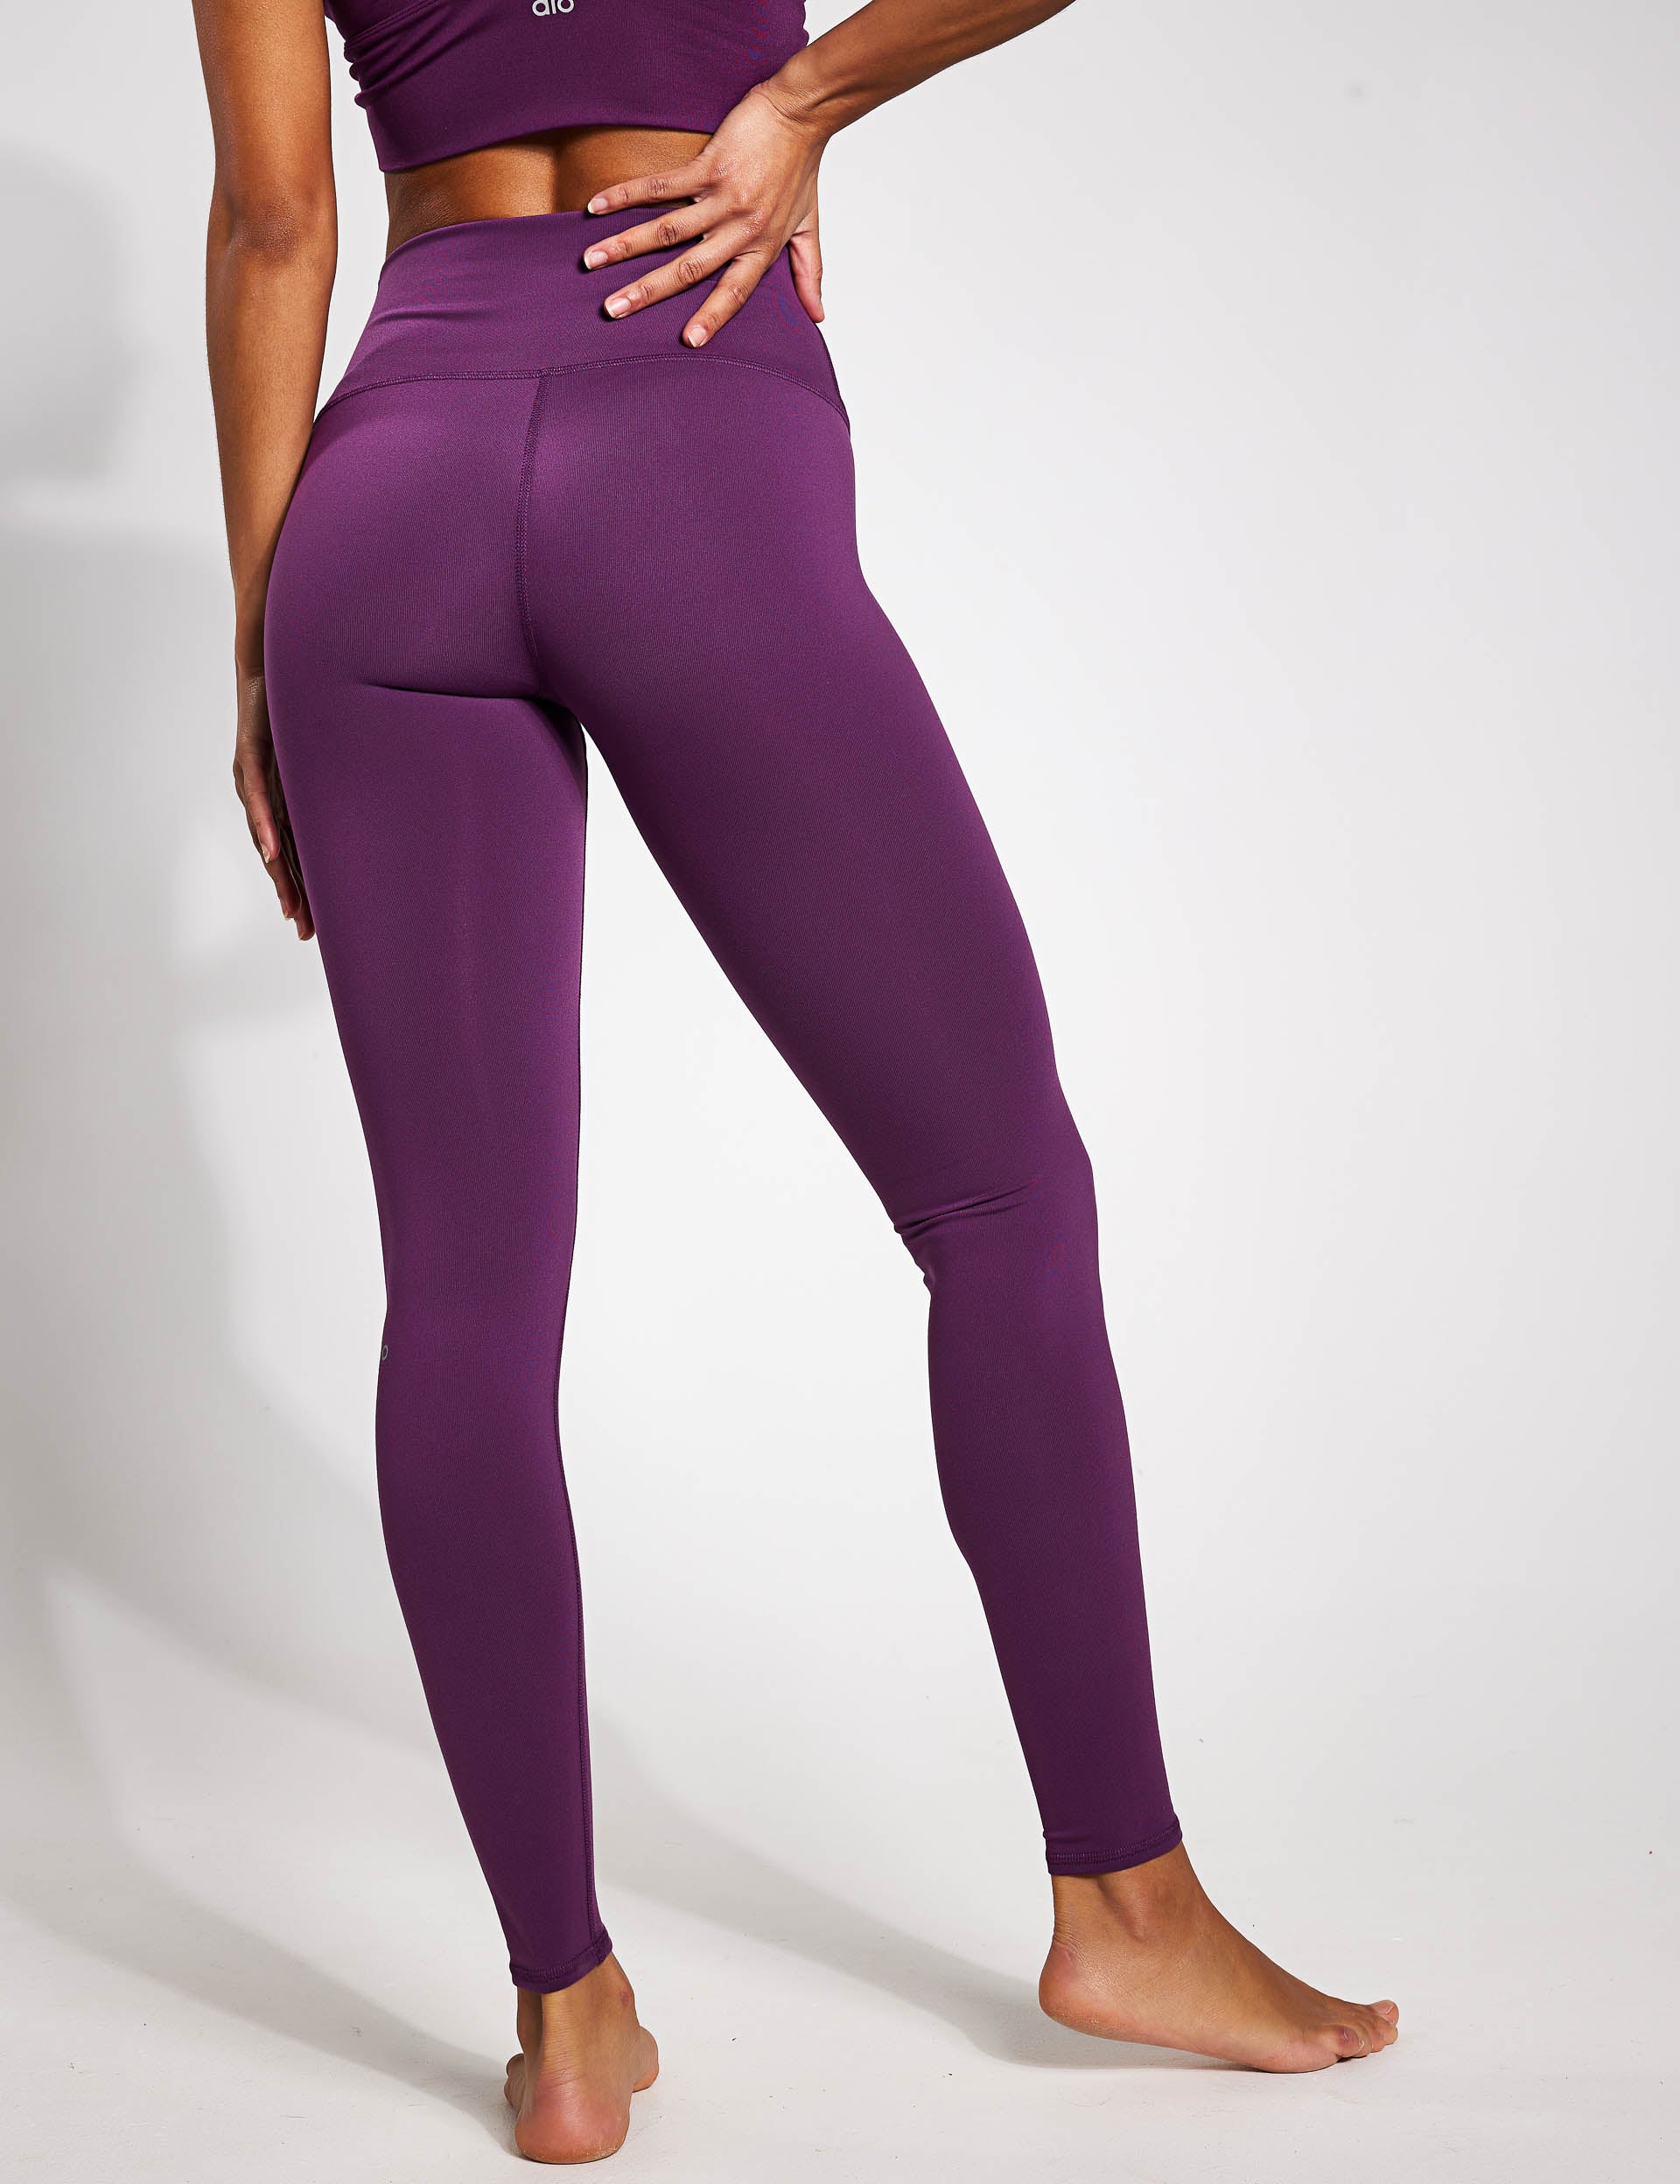 Avia Ruched Adjustable Leg Purple Leggings Workout Yoga Pants